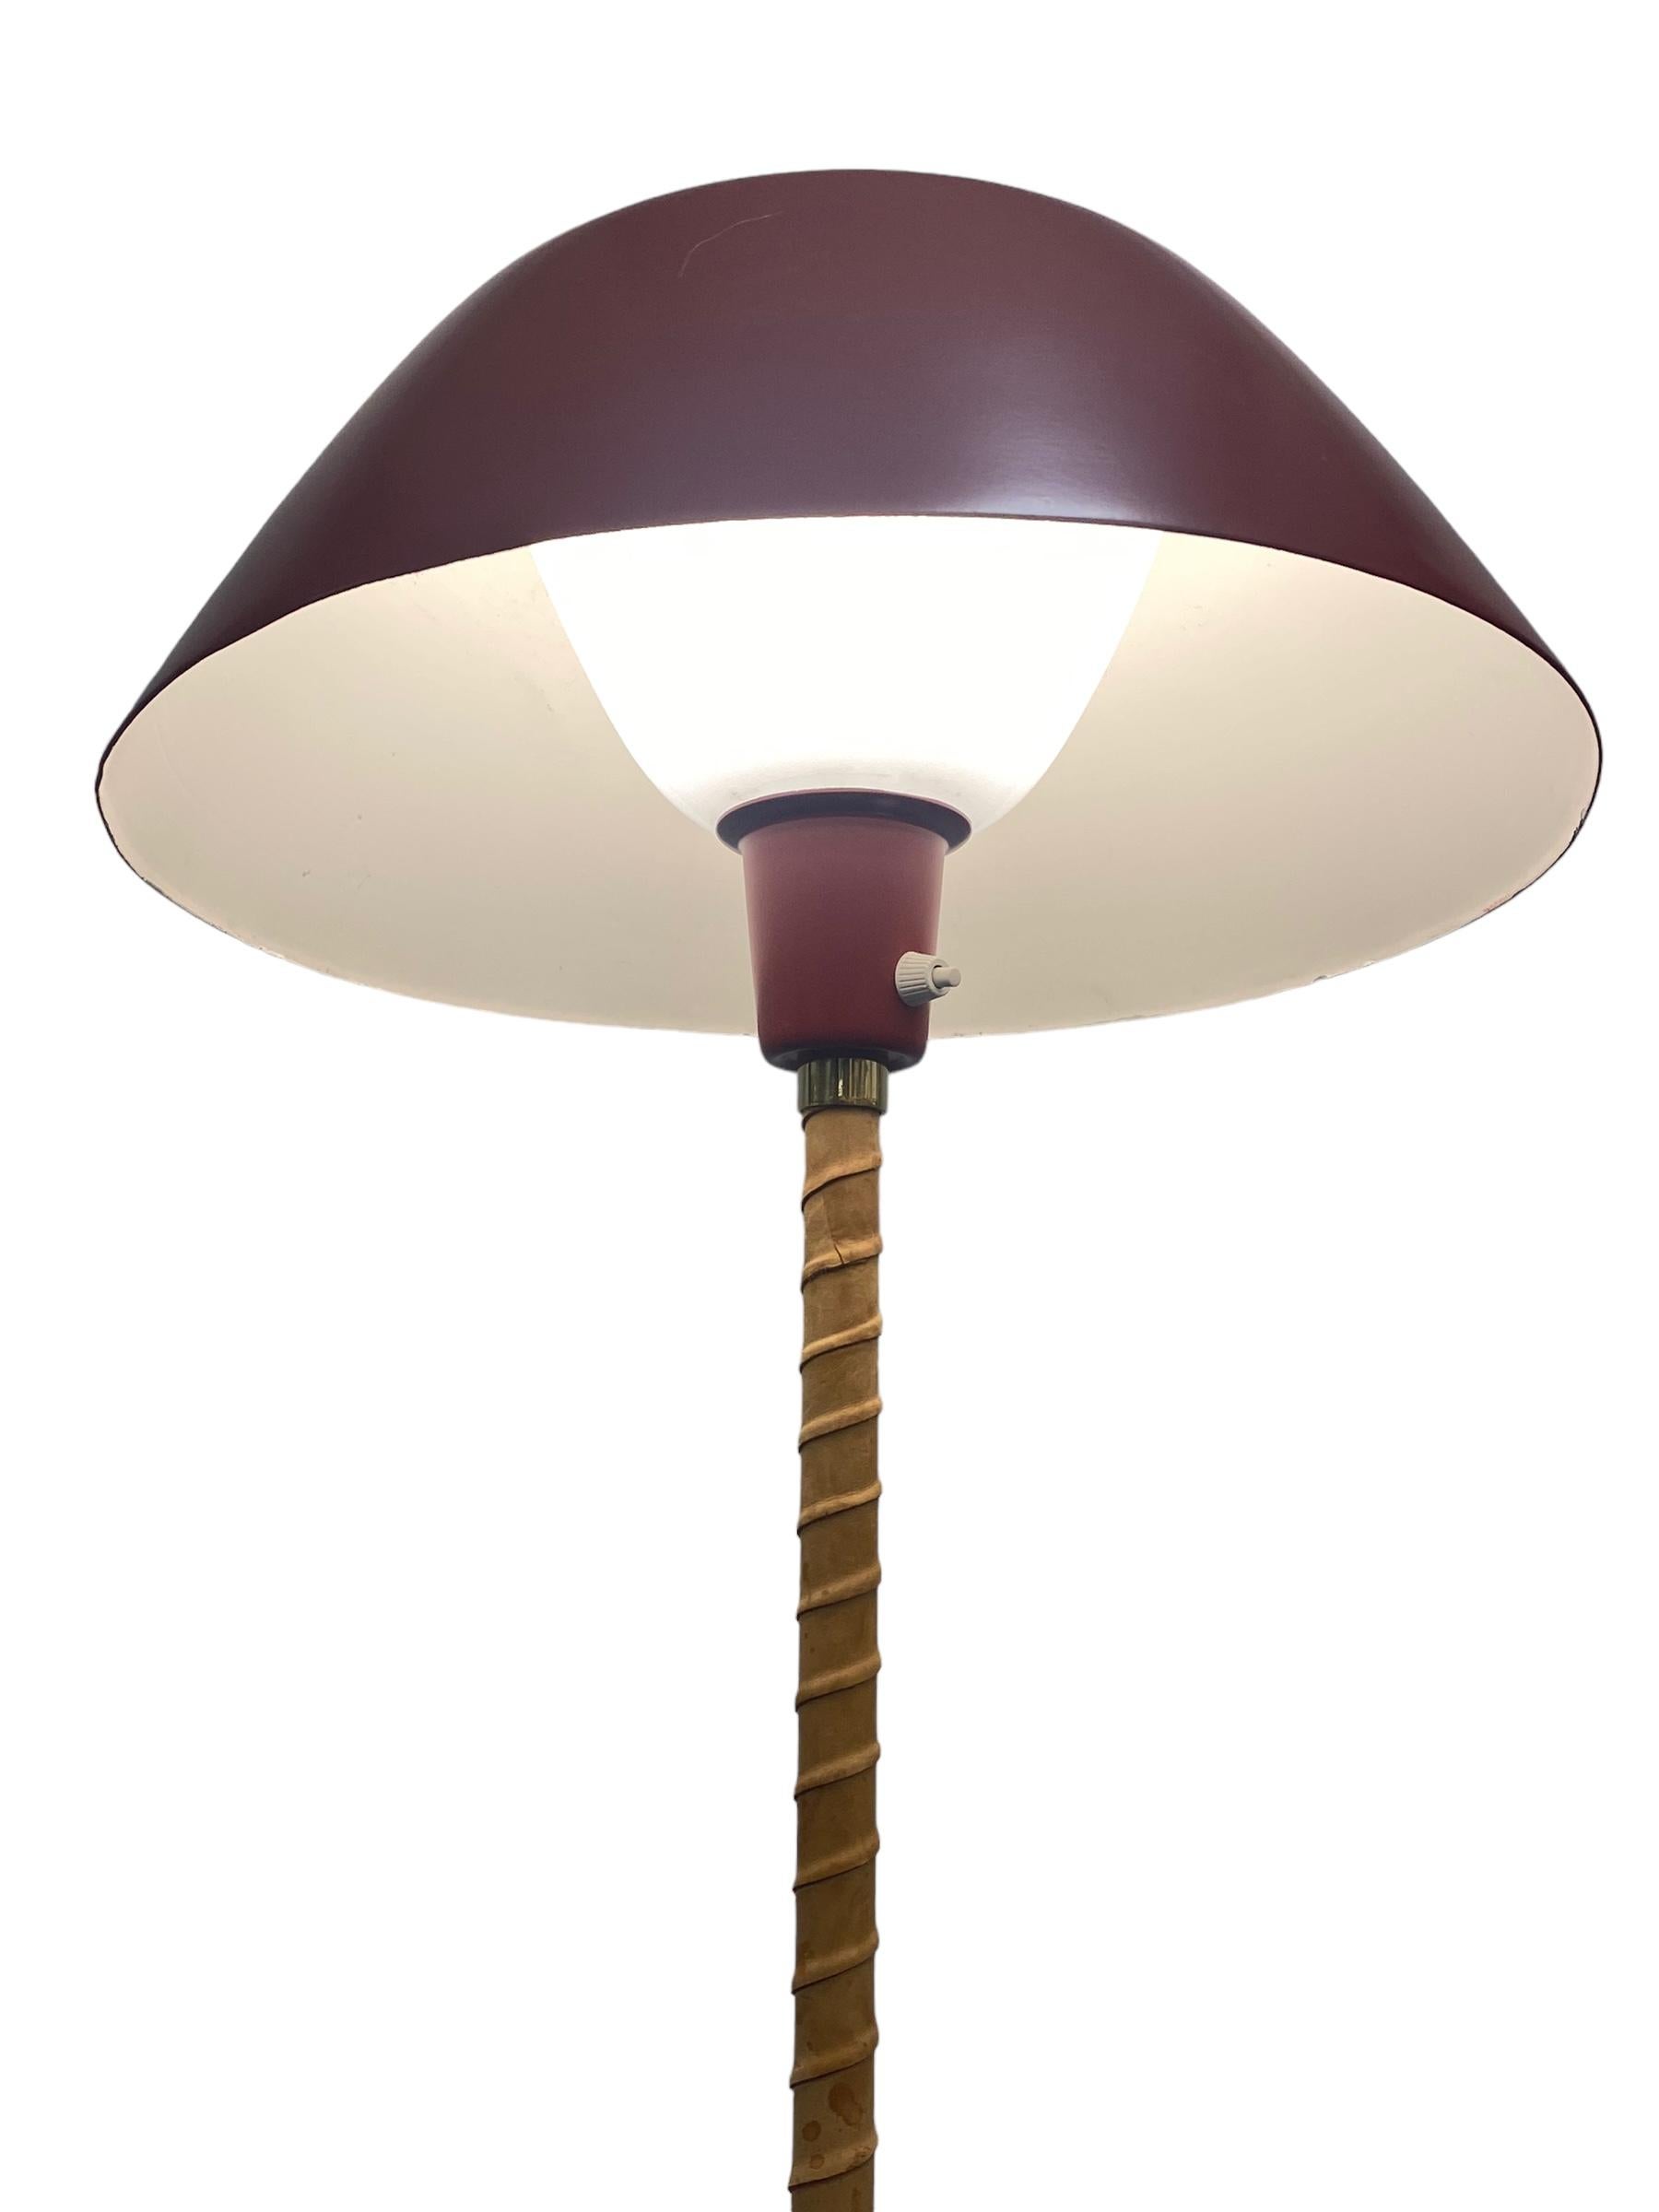 Lisa Johansson-Papé Rare Version of Senator Floor Lamp, Orno  For Sale 2